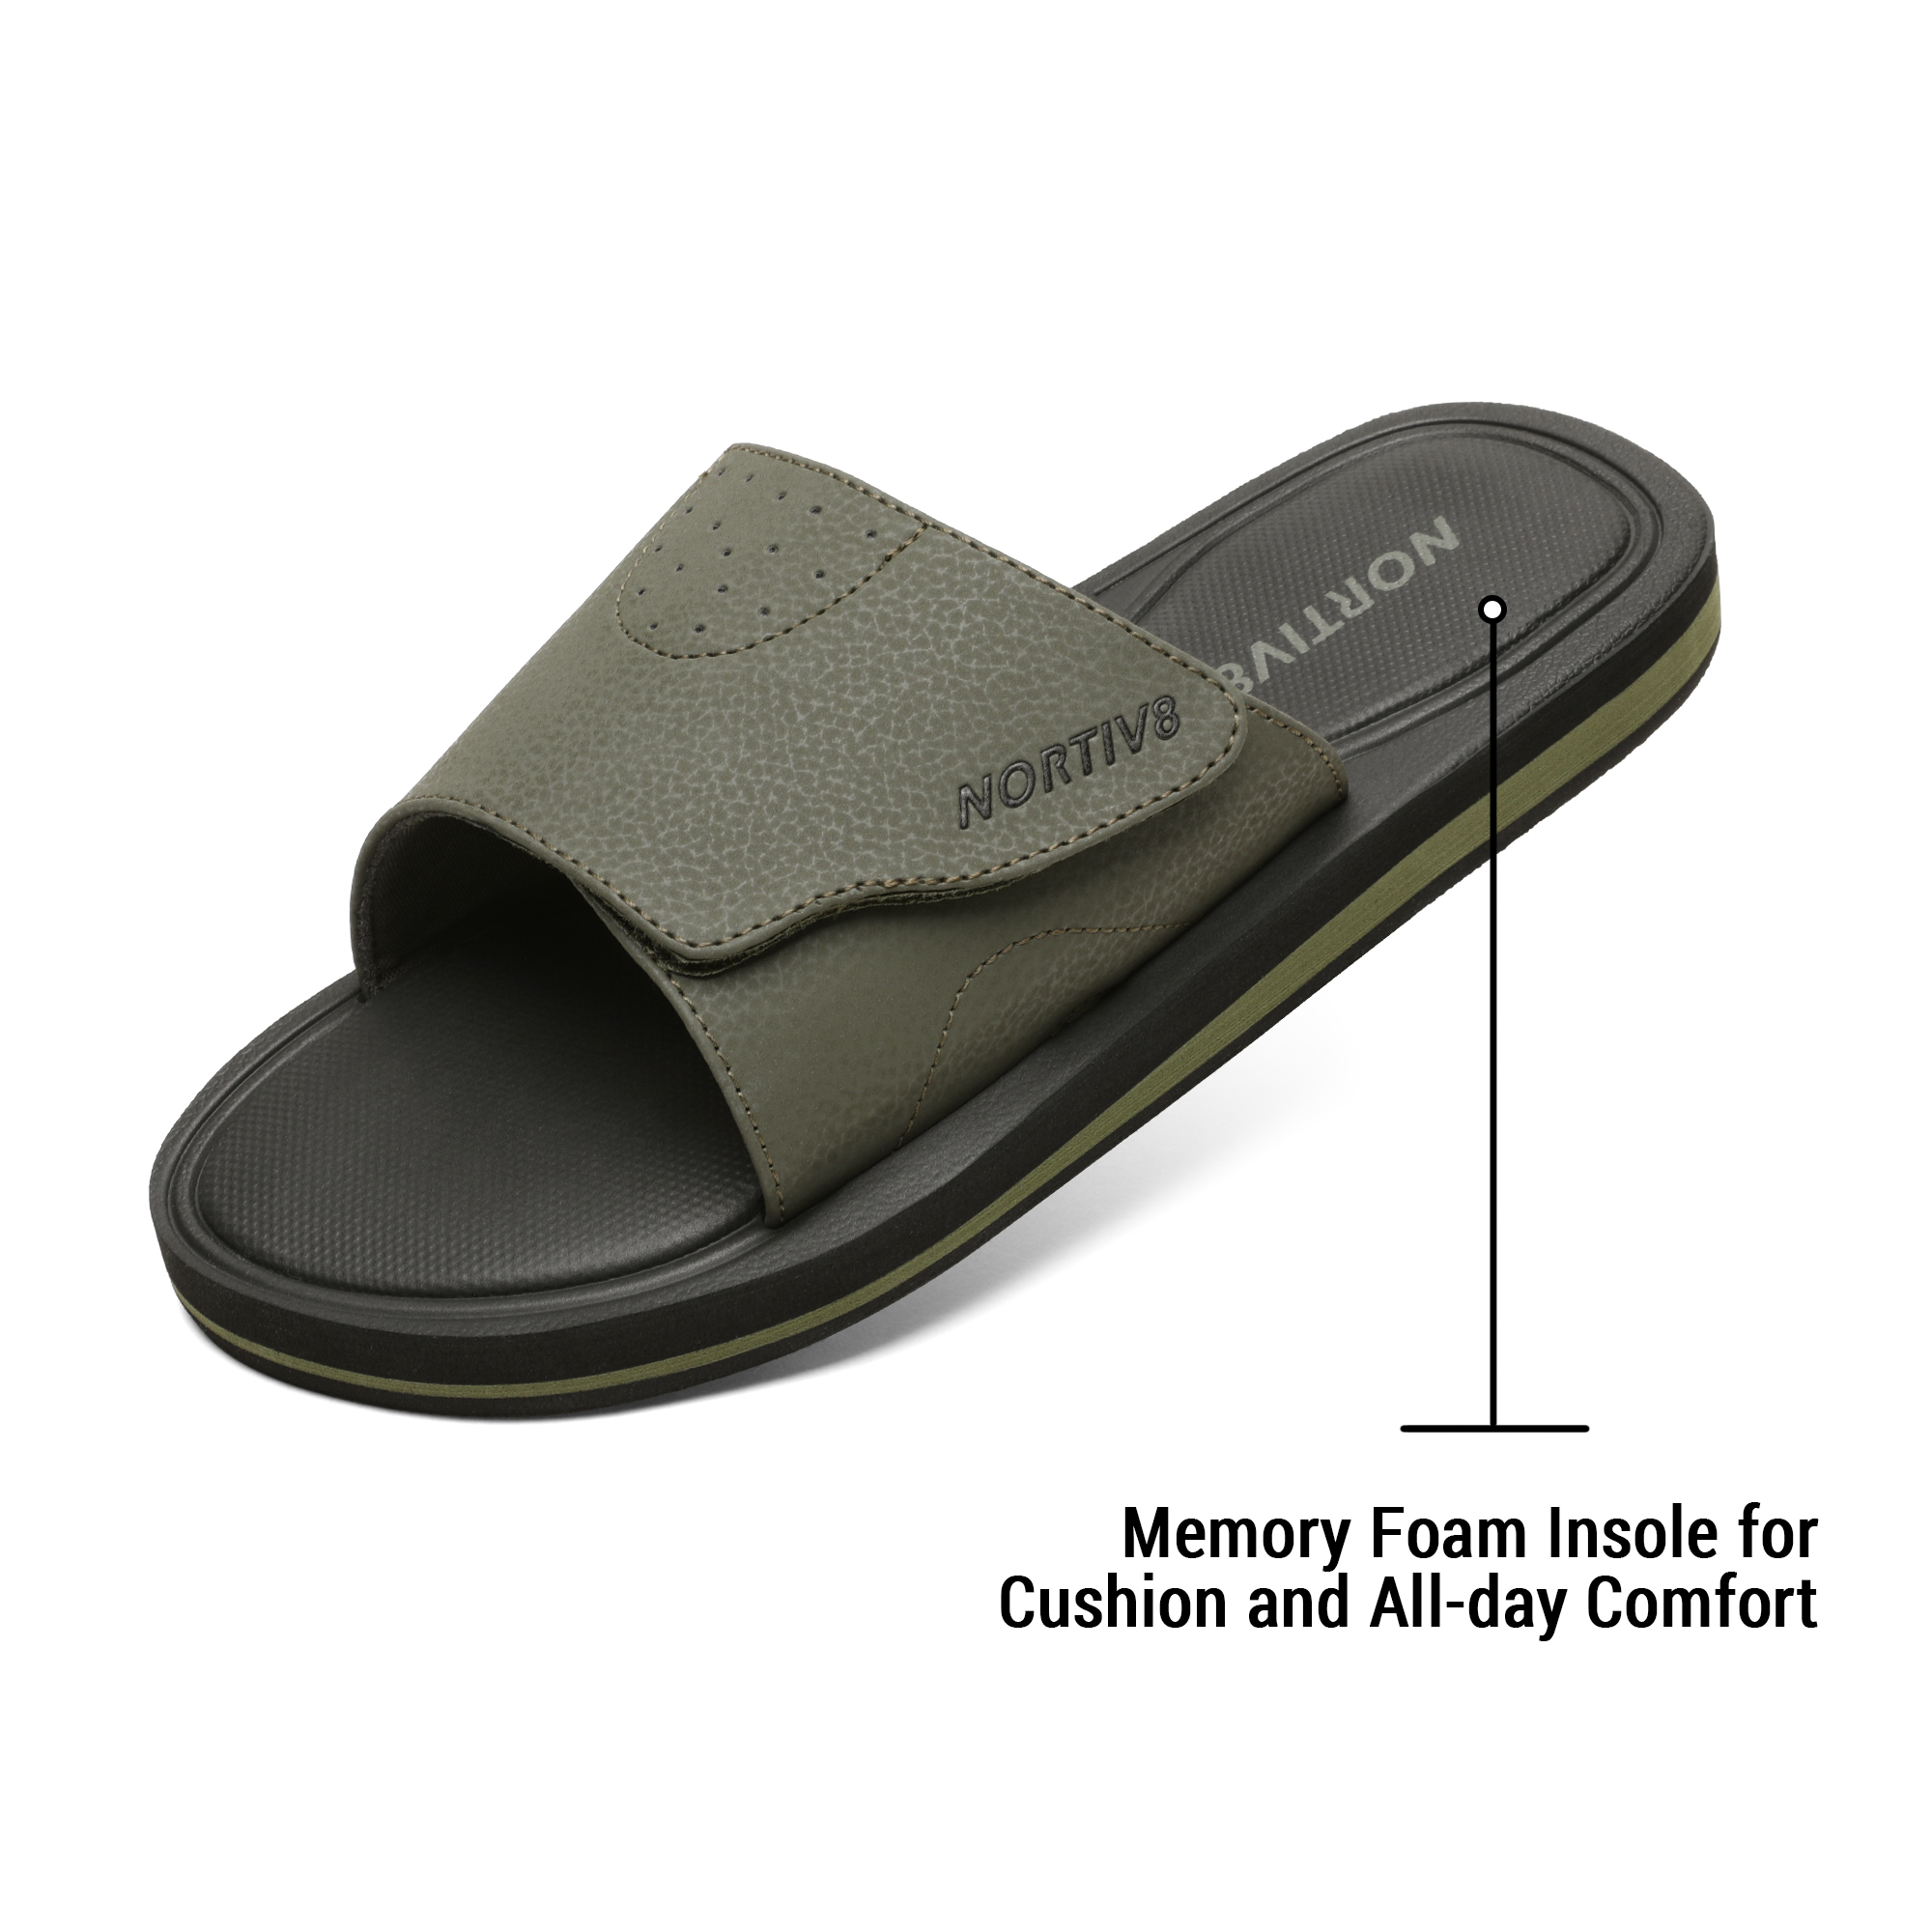 Nortiv8 Men's Memory Foam Adjustable Slide Sandals Comfort Lightweight Summer Beach Sandals Shoes FUSION OLIVE/GREEN Size 8 - image 2 of 5